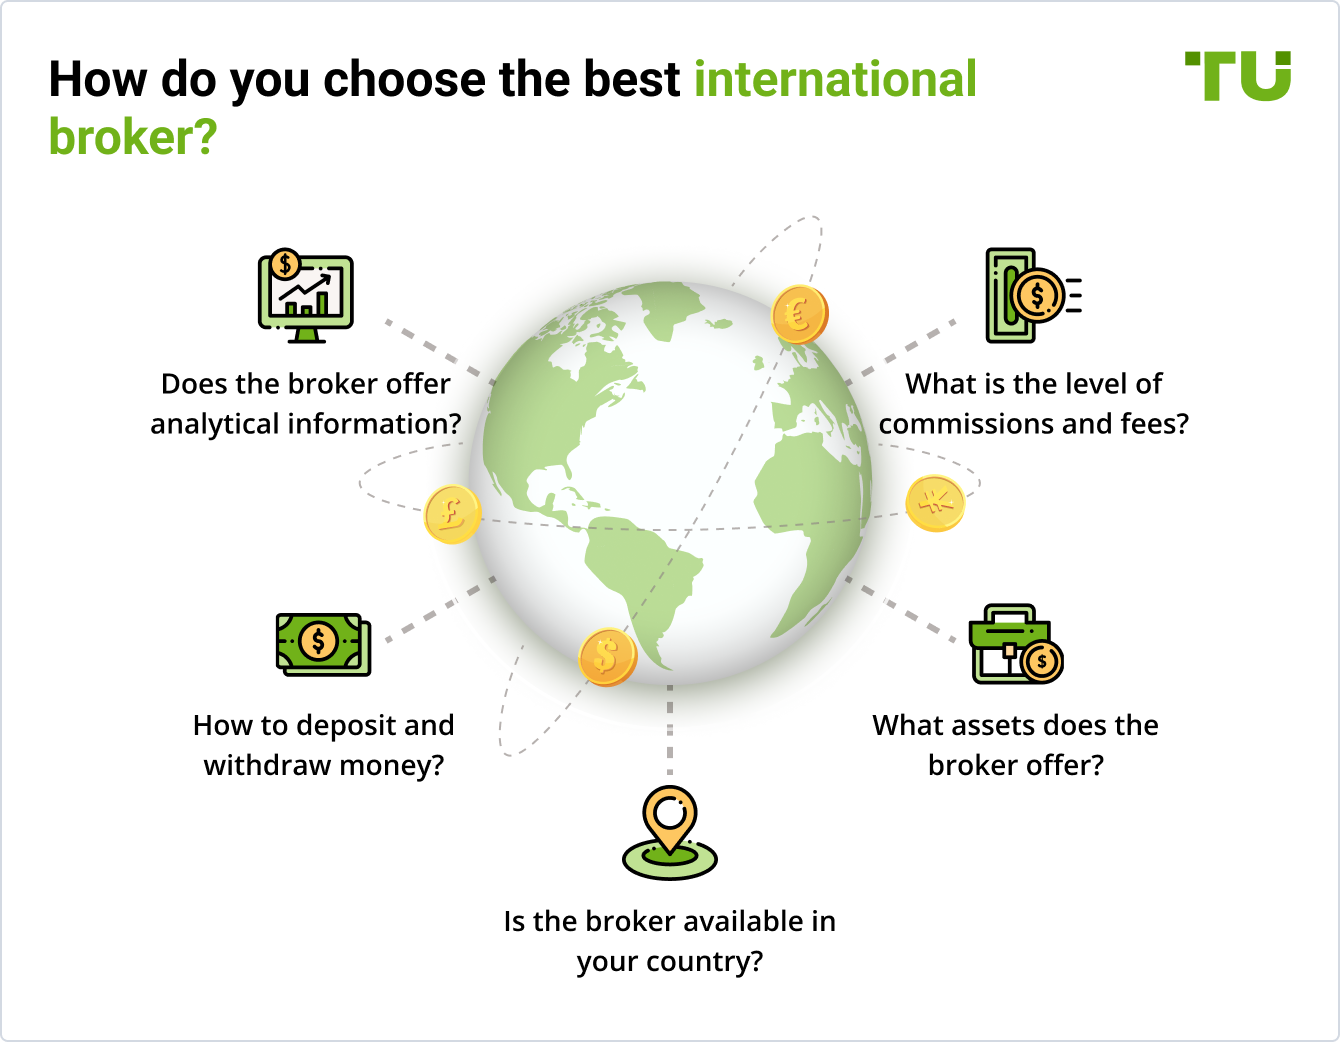 How do you choose the best international broker?